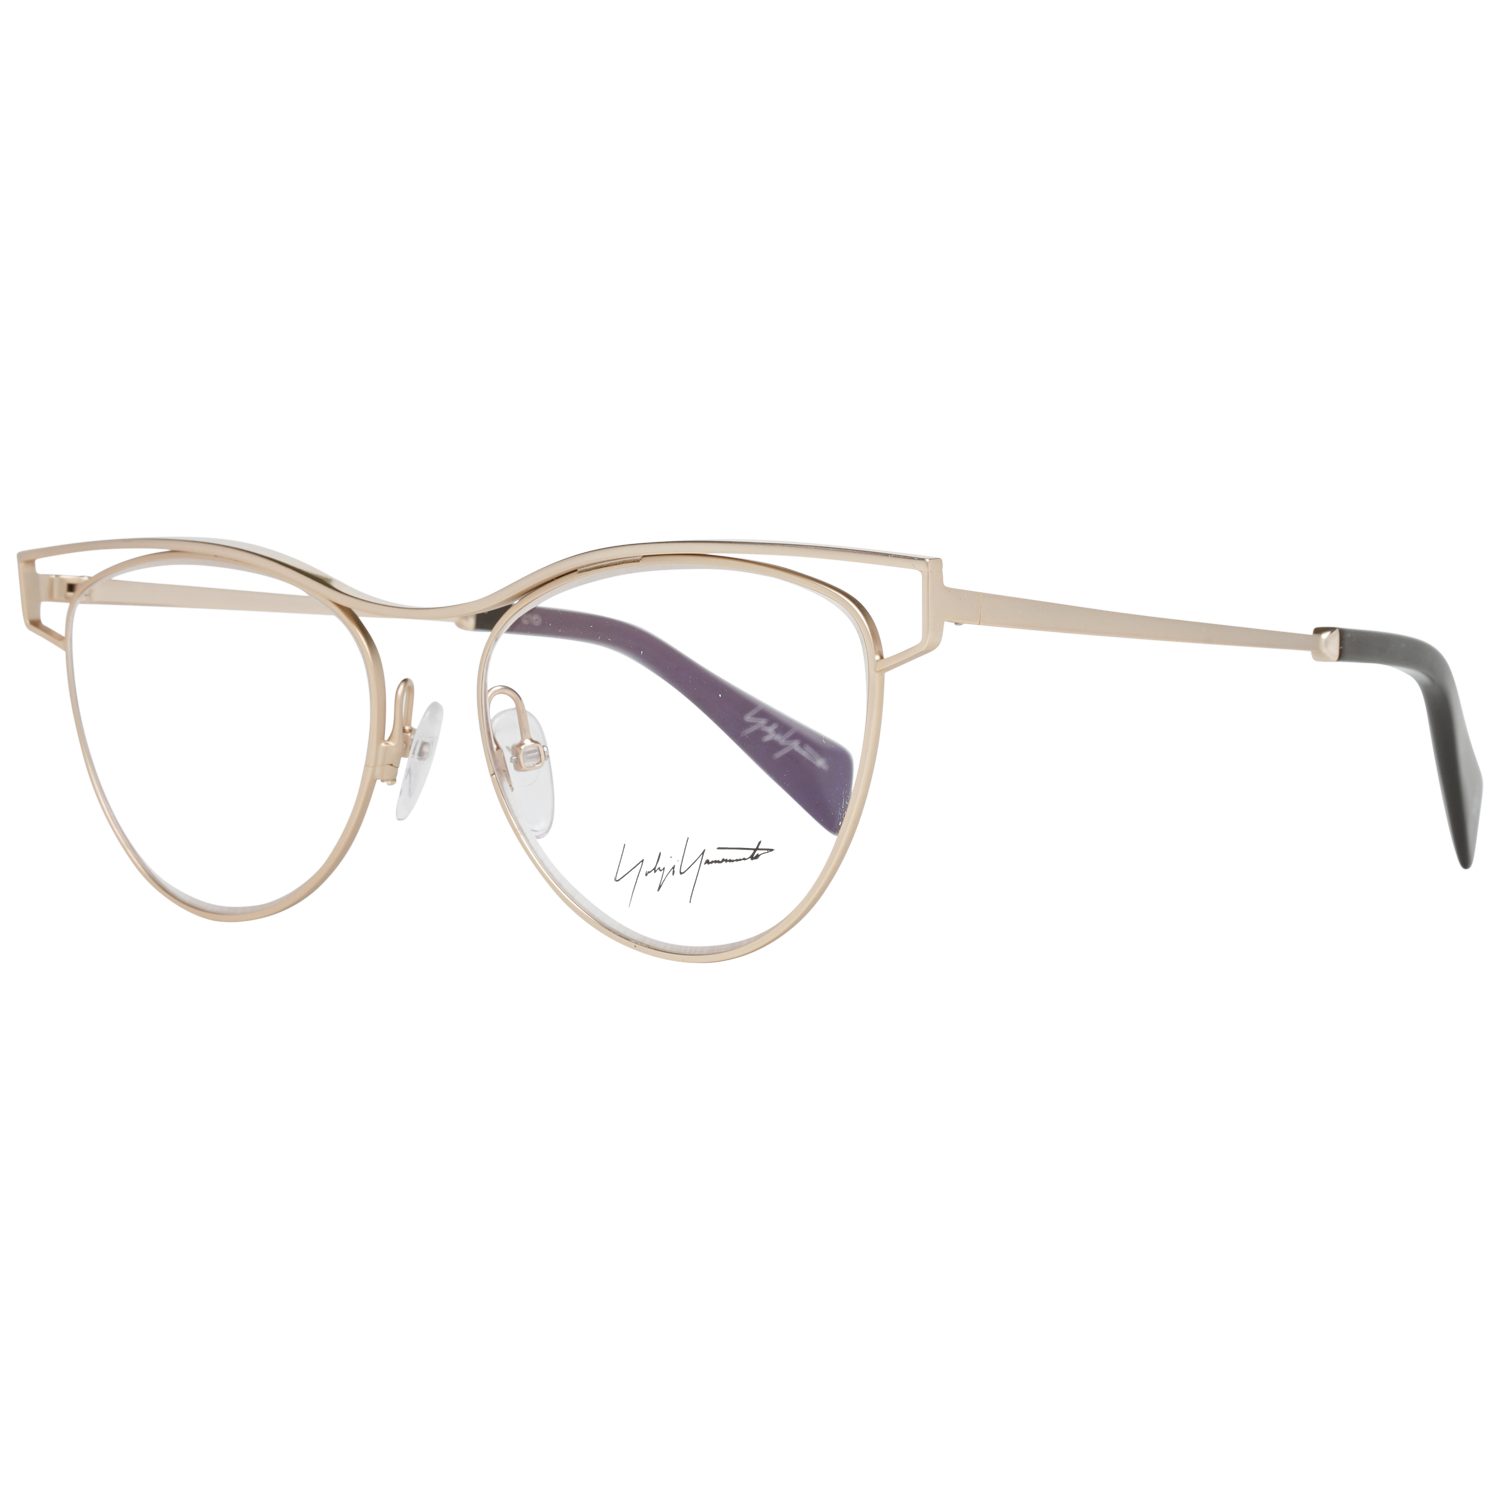 Yohji Yamamoto Frames Yohji Yamamoto Optical Frame YY3016 401 52 Eyeglasses Eyewear UK USA Australia 